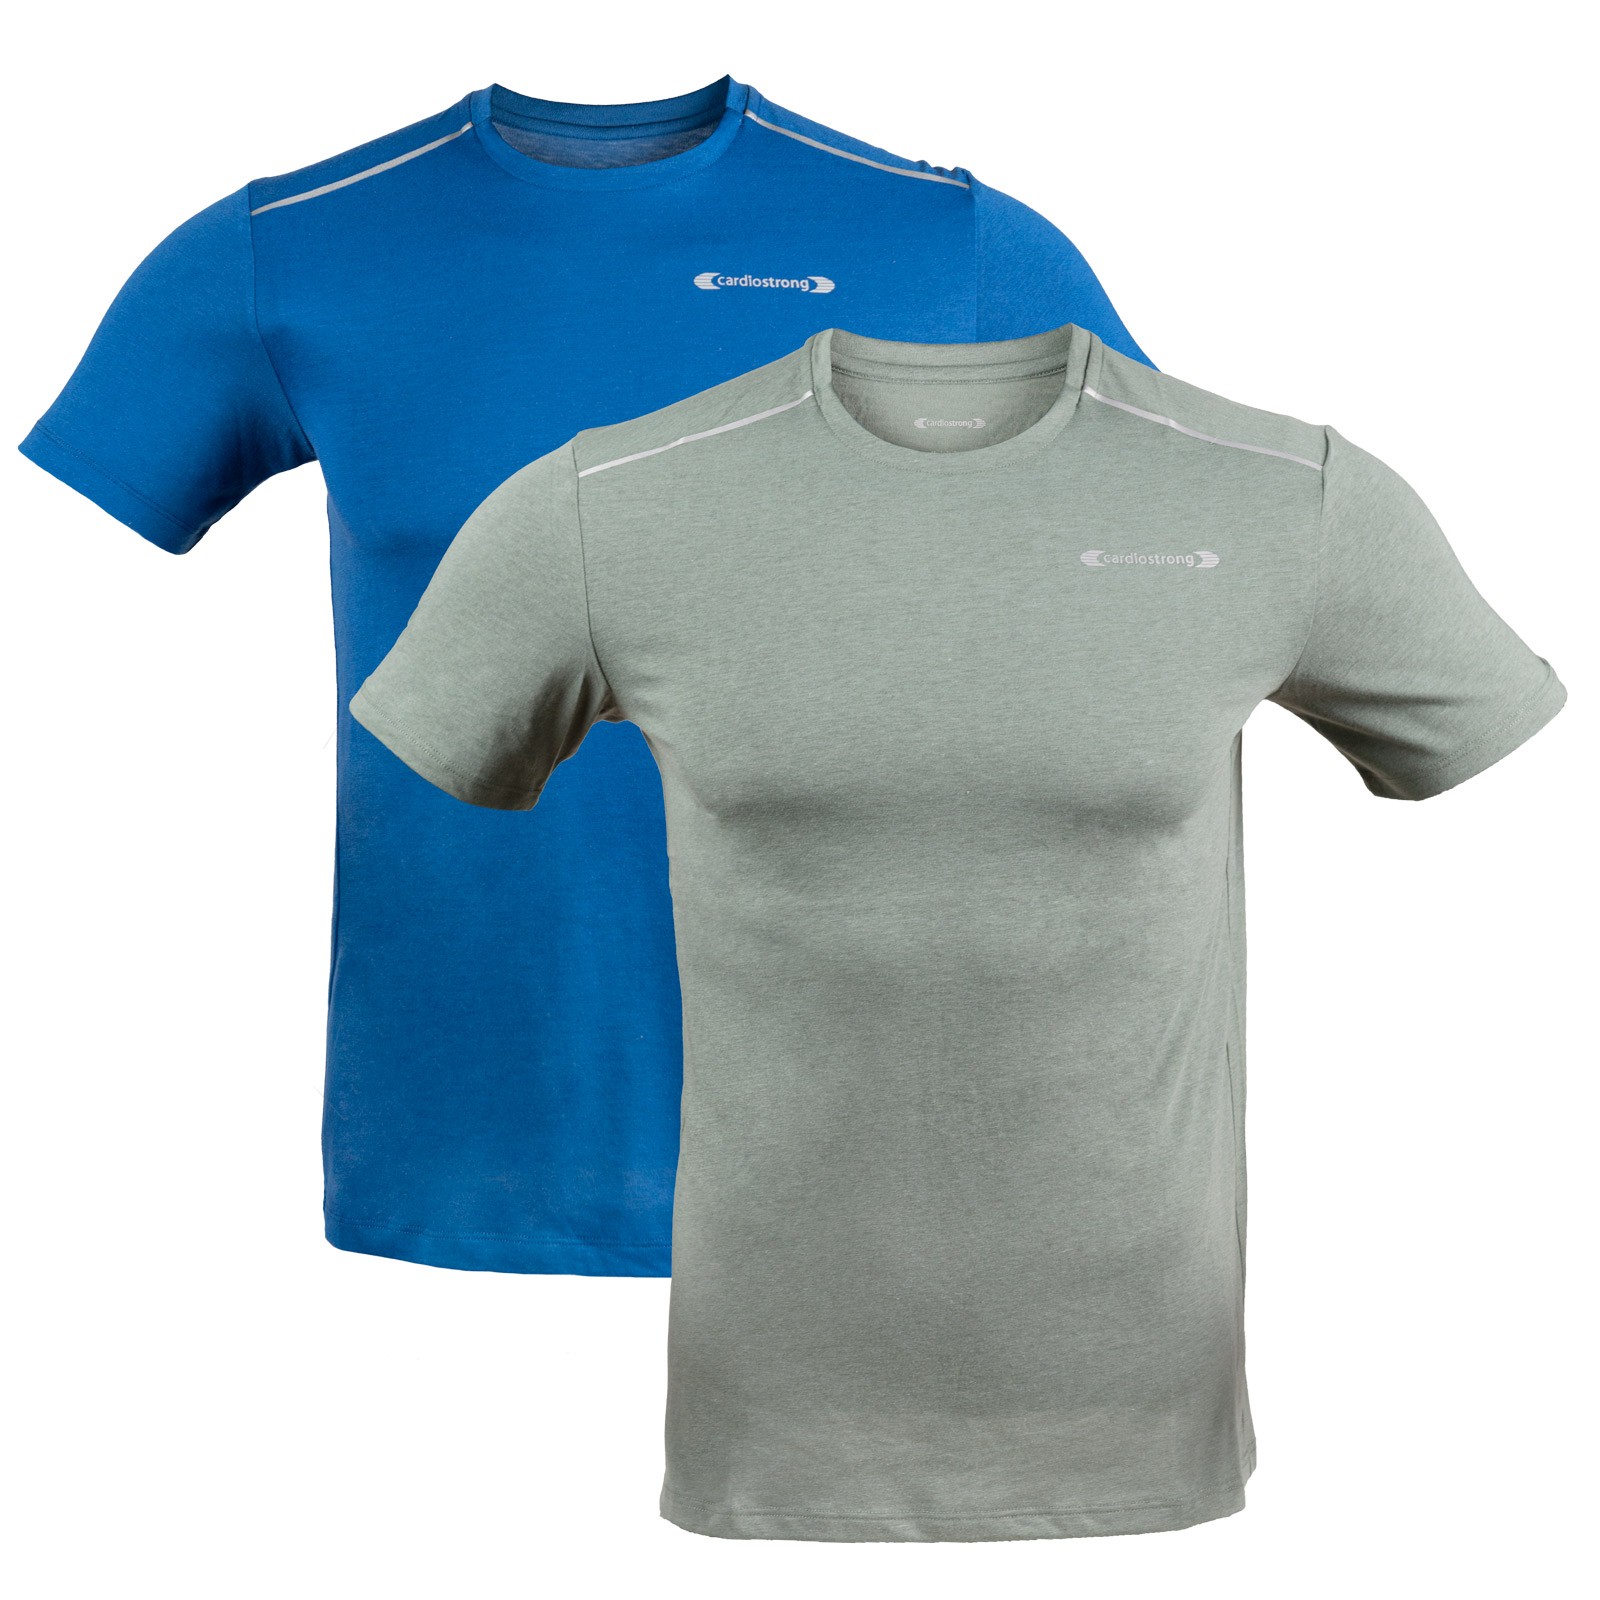 cardiostrong Fitness T-Shirt for men - cardiostrong